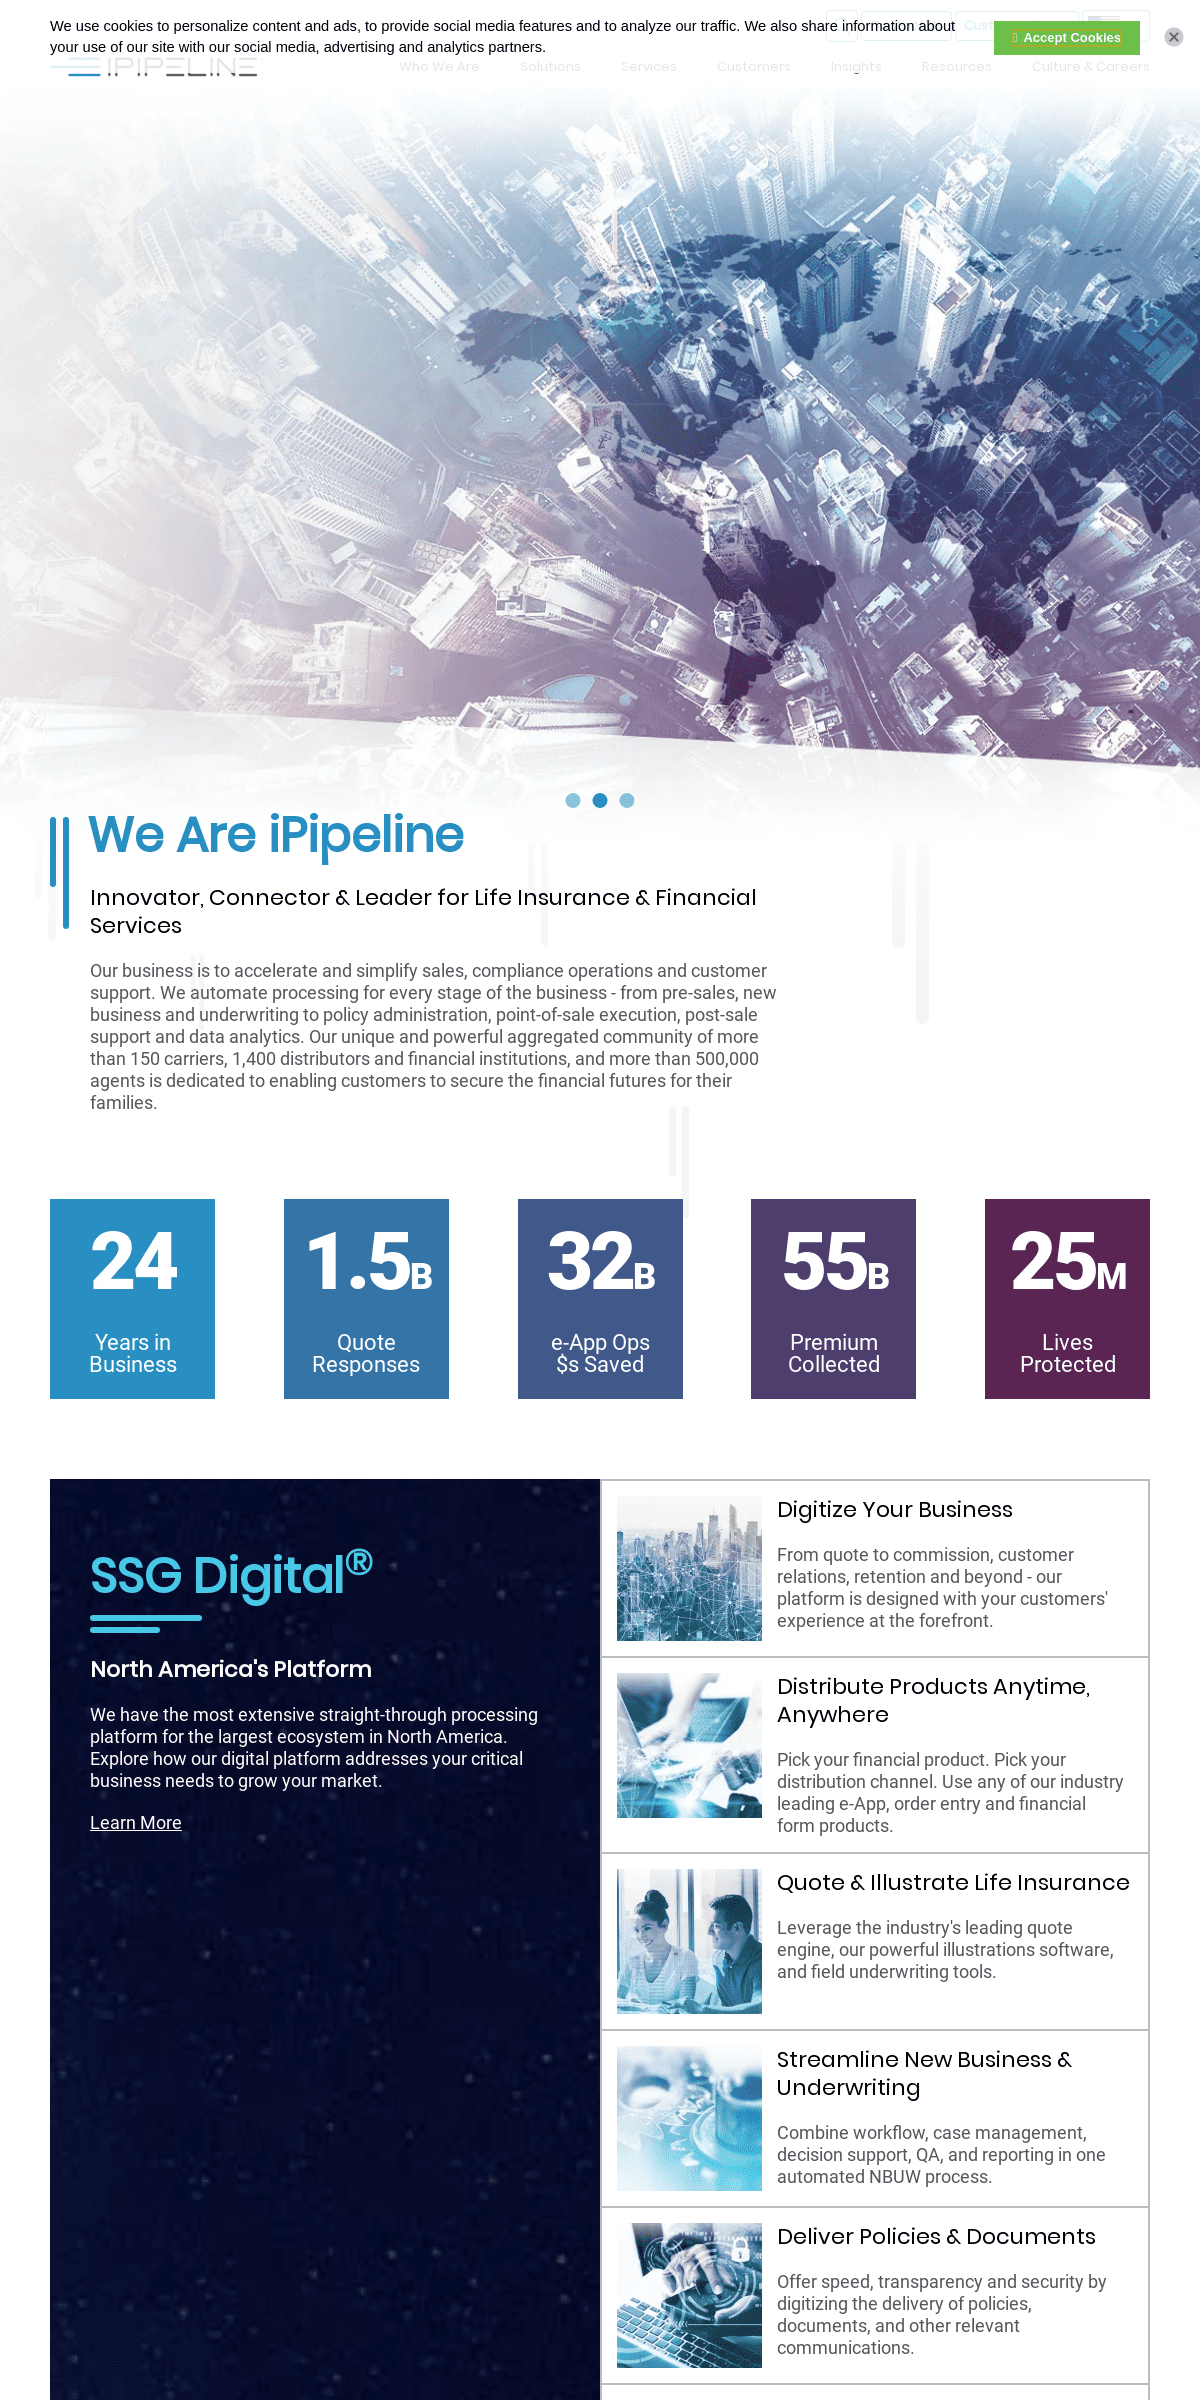 A complete backup of ipipeline.com